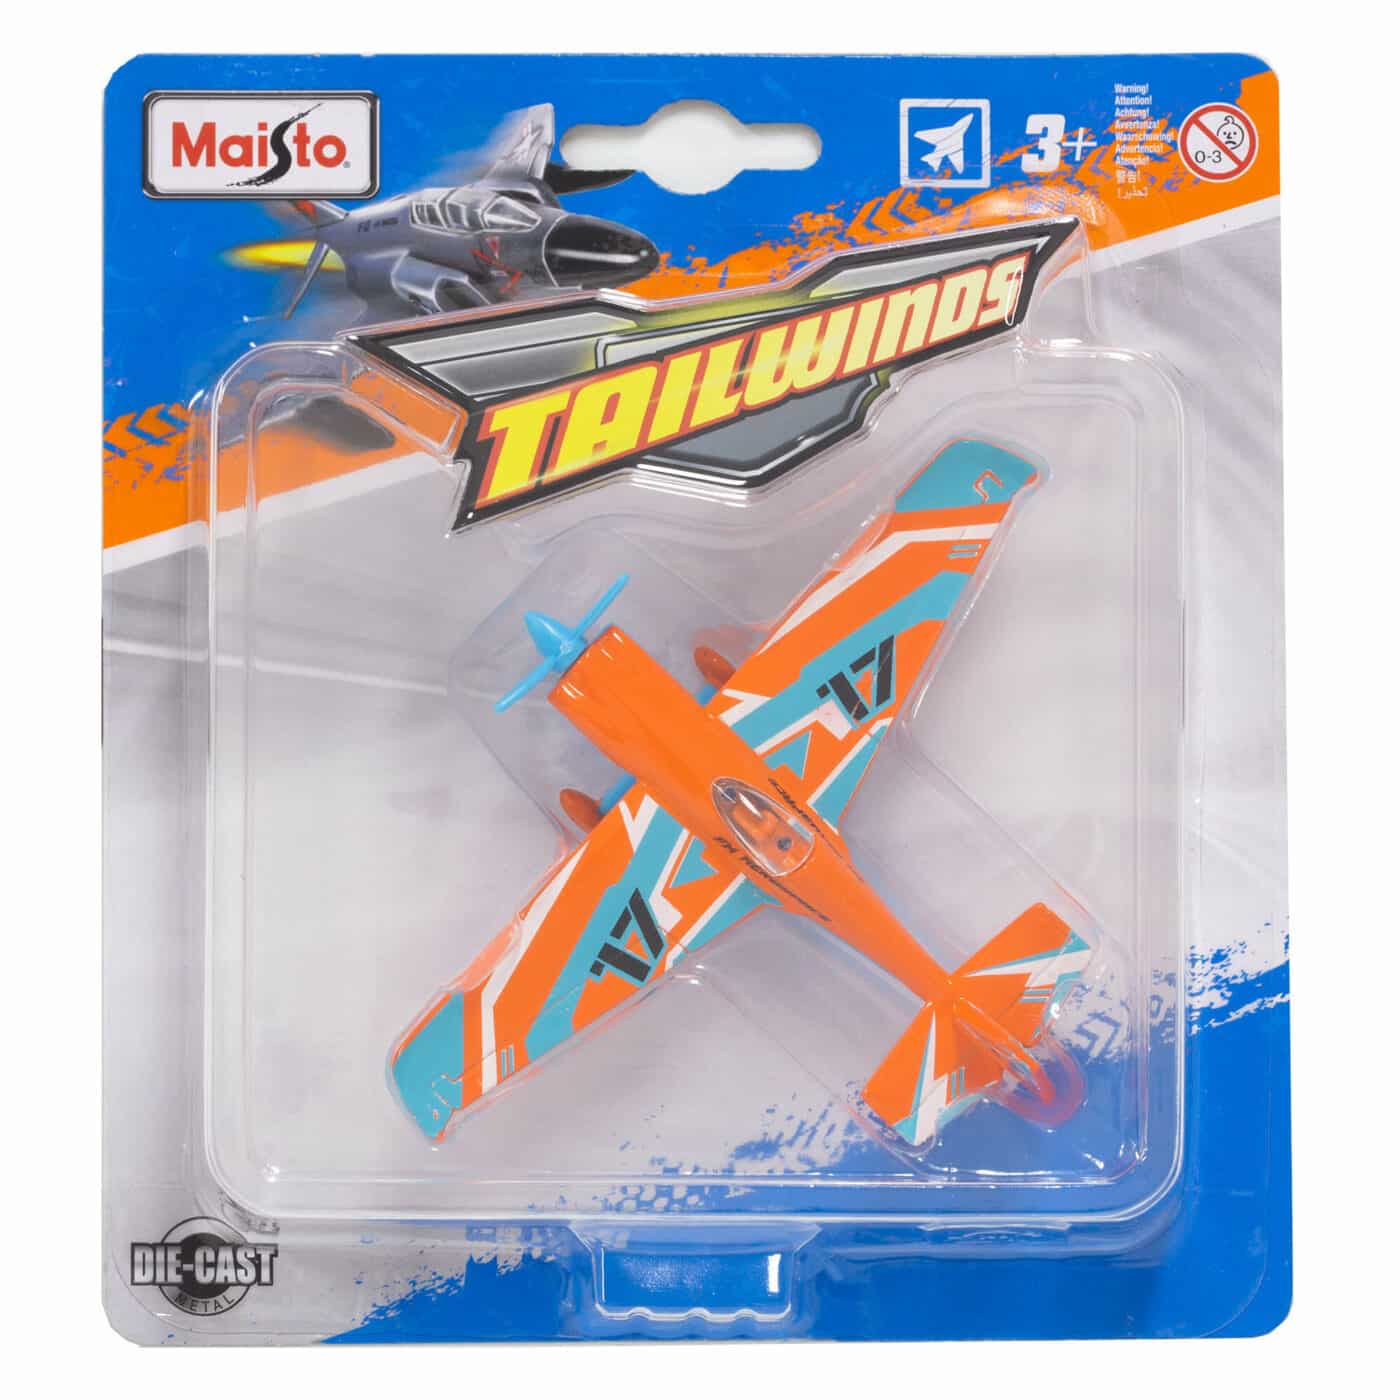 Maisto-tailwings-die-cast-fm-aerospace